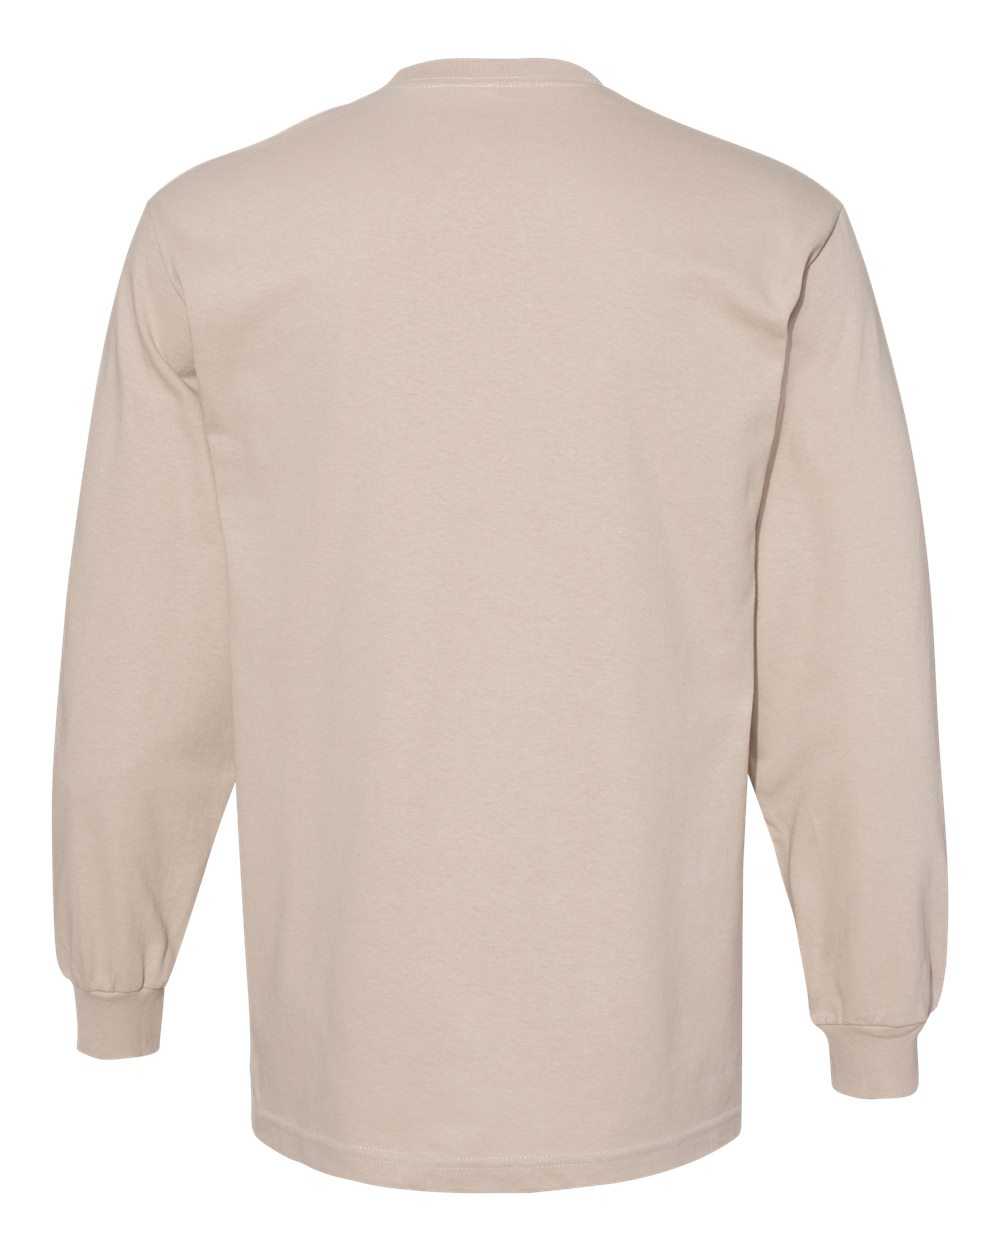 American Apparel 1304 Unisex Heavyweight Cotton Long Sleeve T-Shirt - Sand - HIT a Double